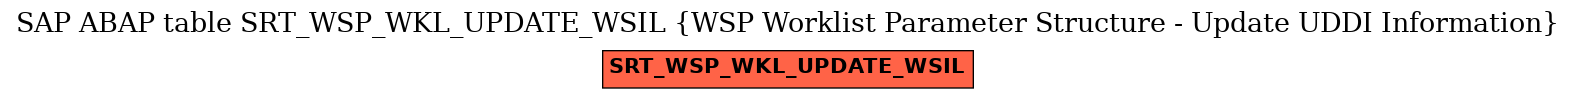 E-R Diagram for table SRT_WSP_WKL_UPDATE_WSIL (WSP Worklist Parameter Structure - Update UDDI Information)